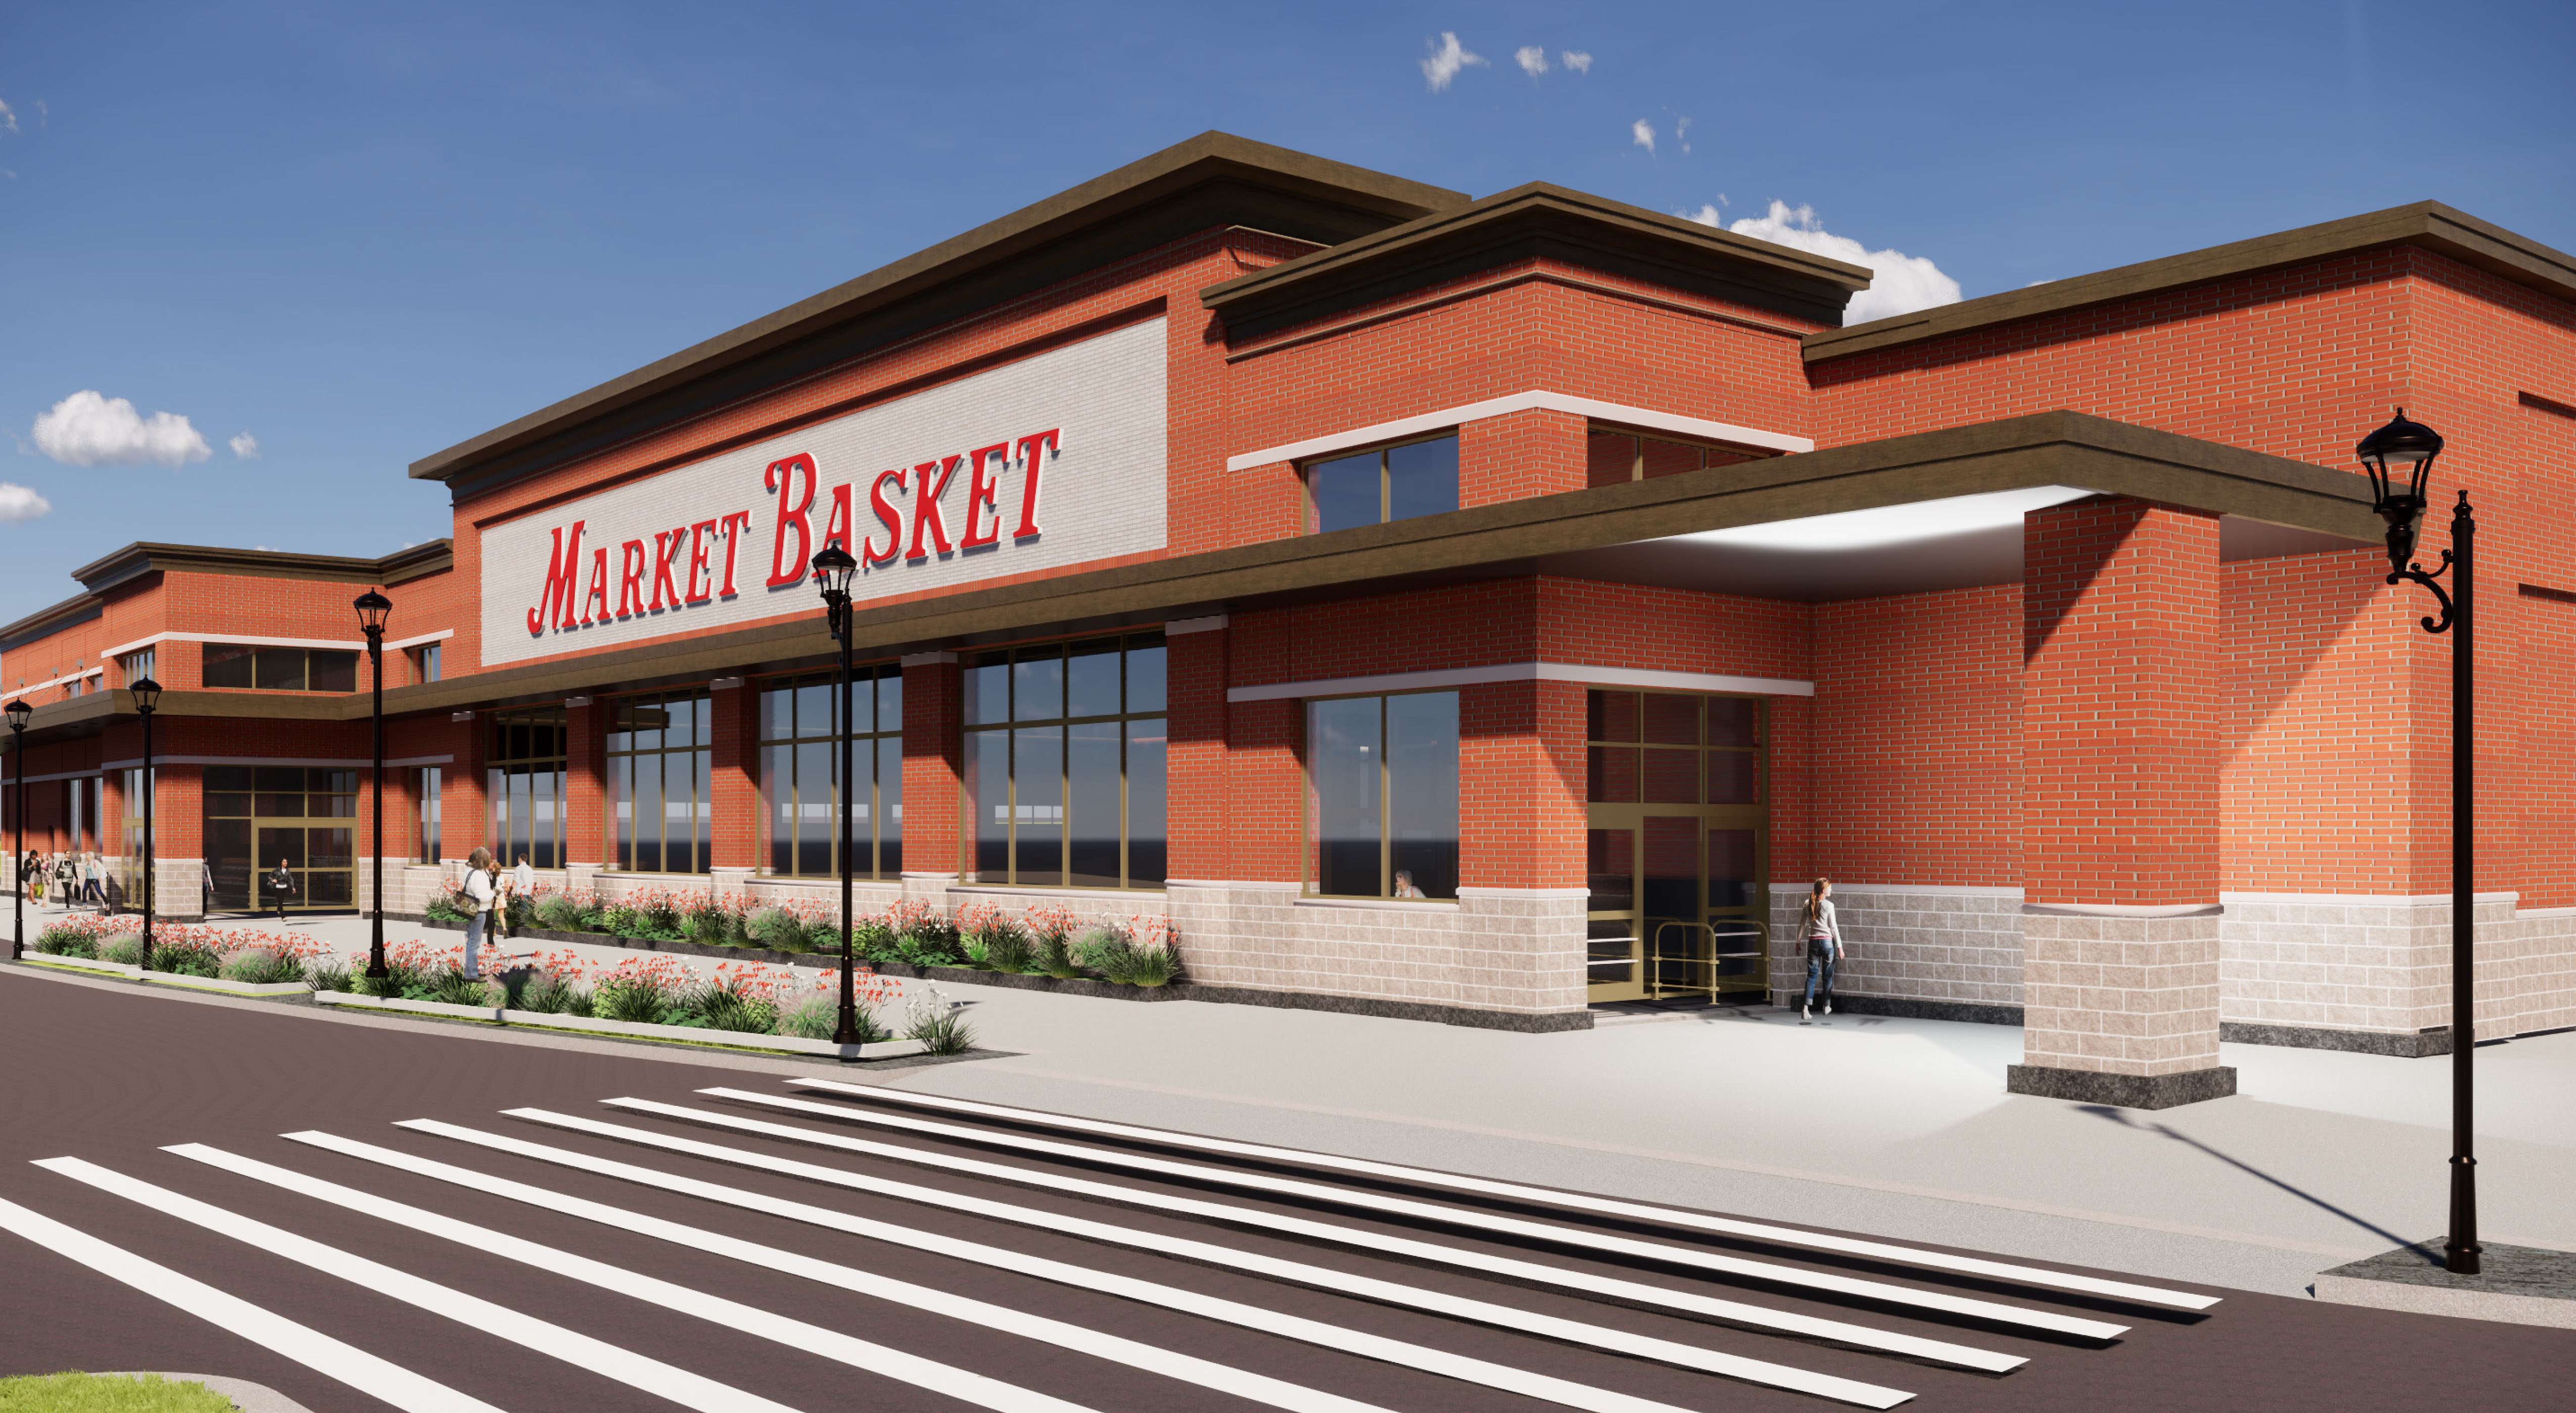 Mini Metal Shopping Basket Tabletop Decor - World Market, basket market 